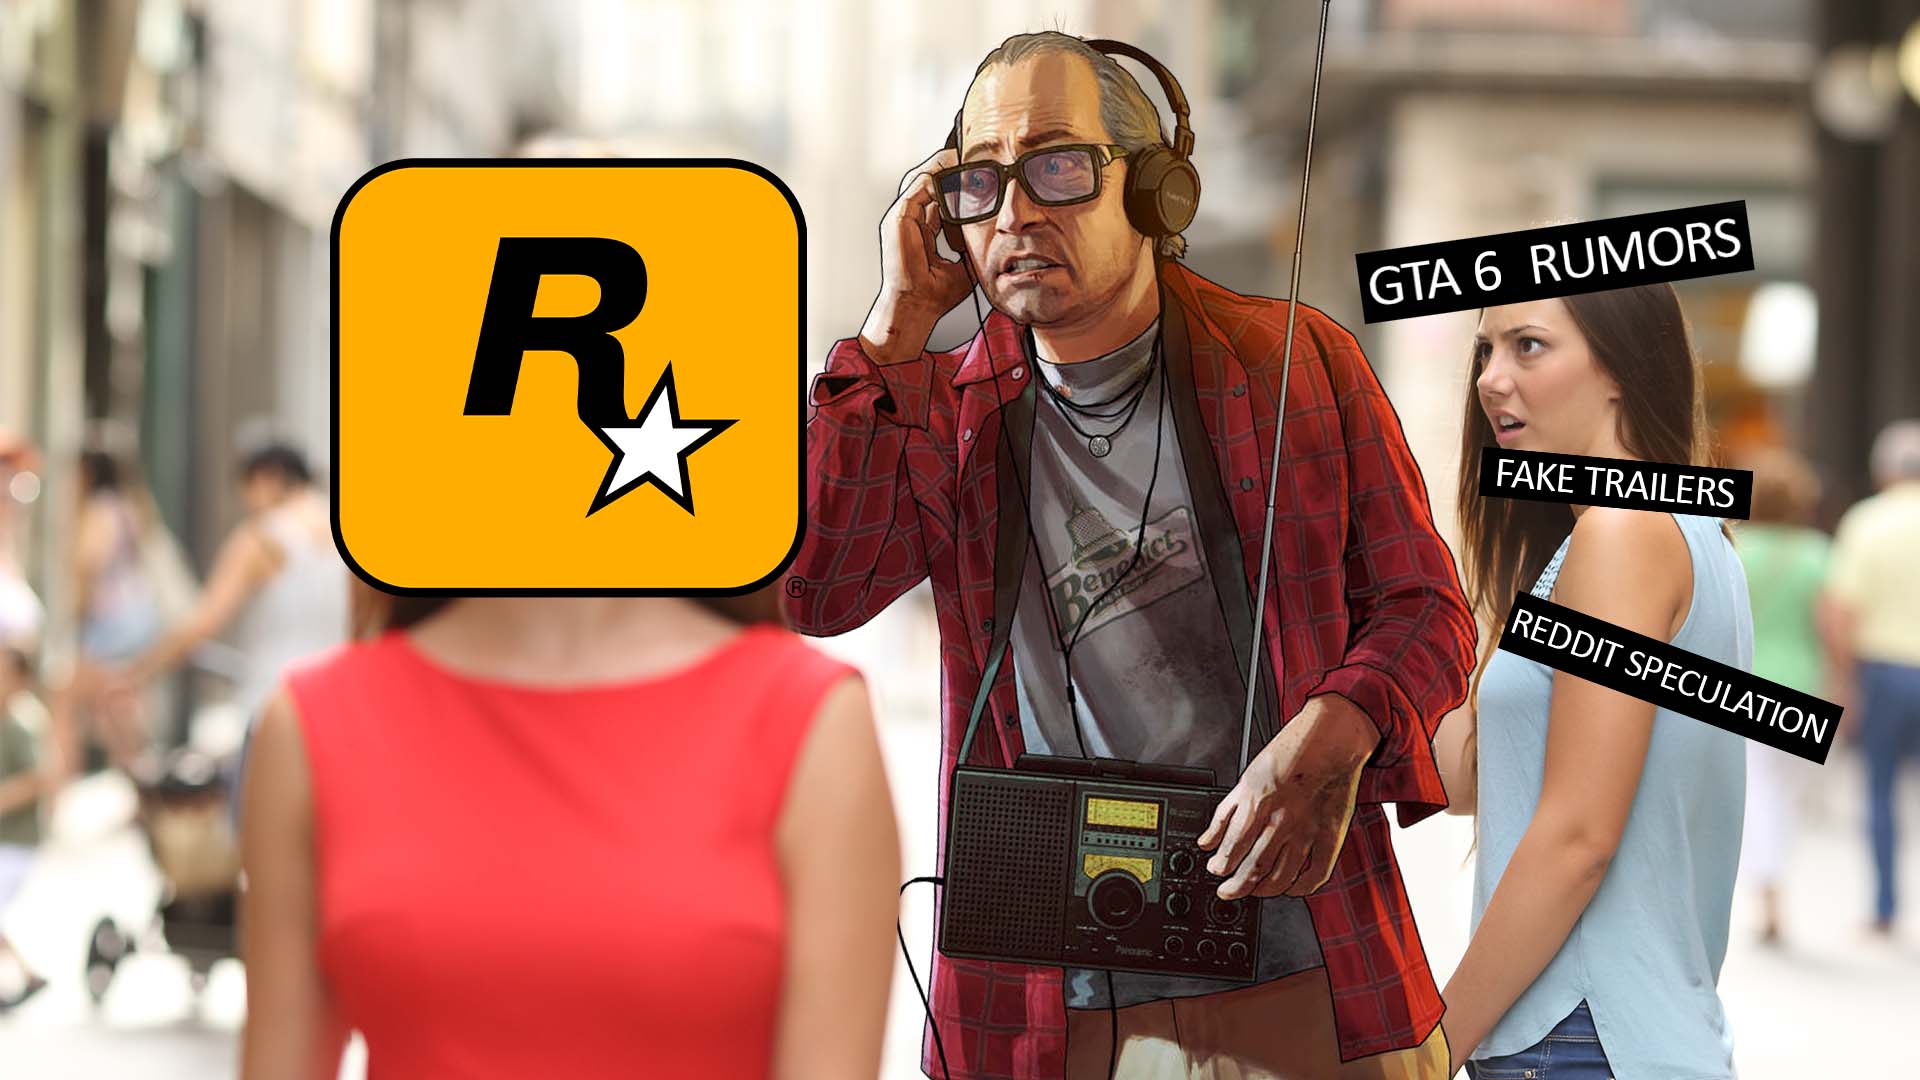 GTA 6 NEWS & LEAKS on X: GTA 6 TRAILER COMING IN EARLY DECEMBER! Confirmed  by @RockstarGames Finally!!  / X